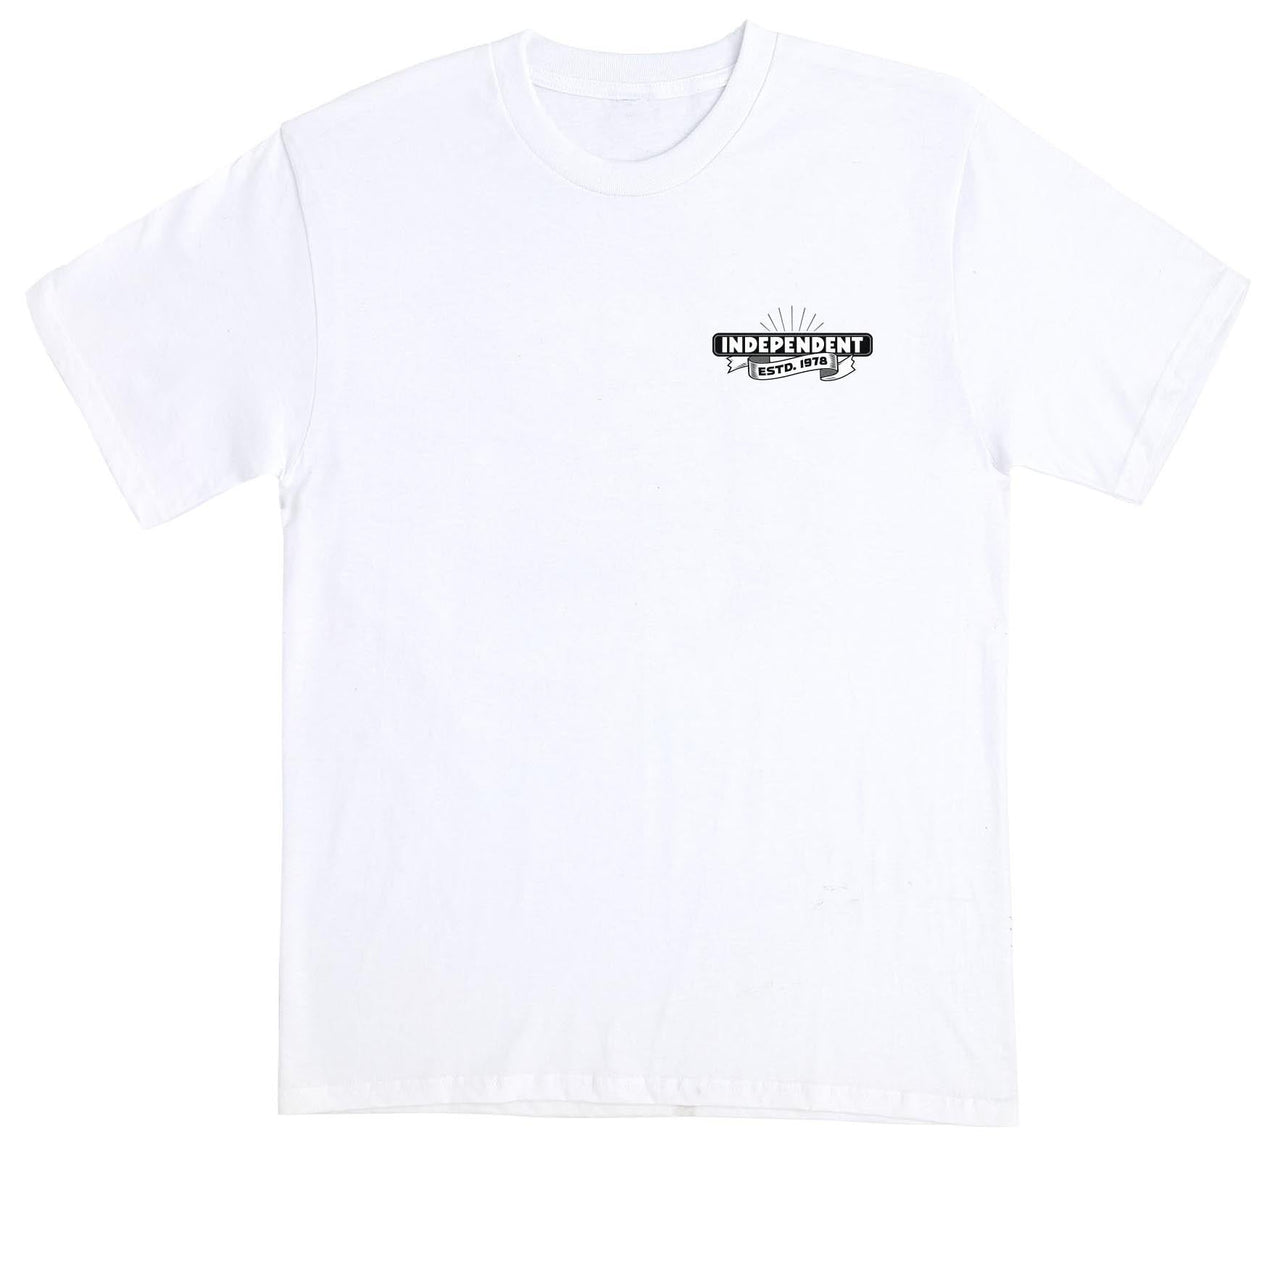 Independent RTB Sledge T-Shirt - White image 2